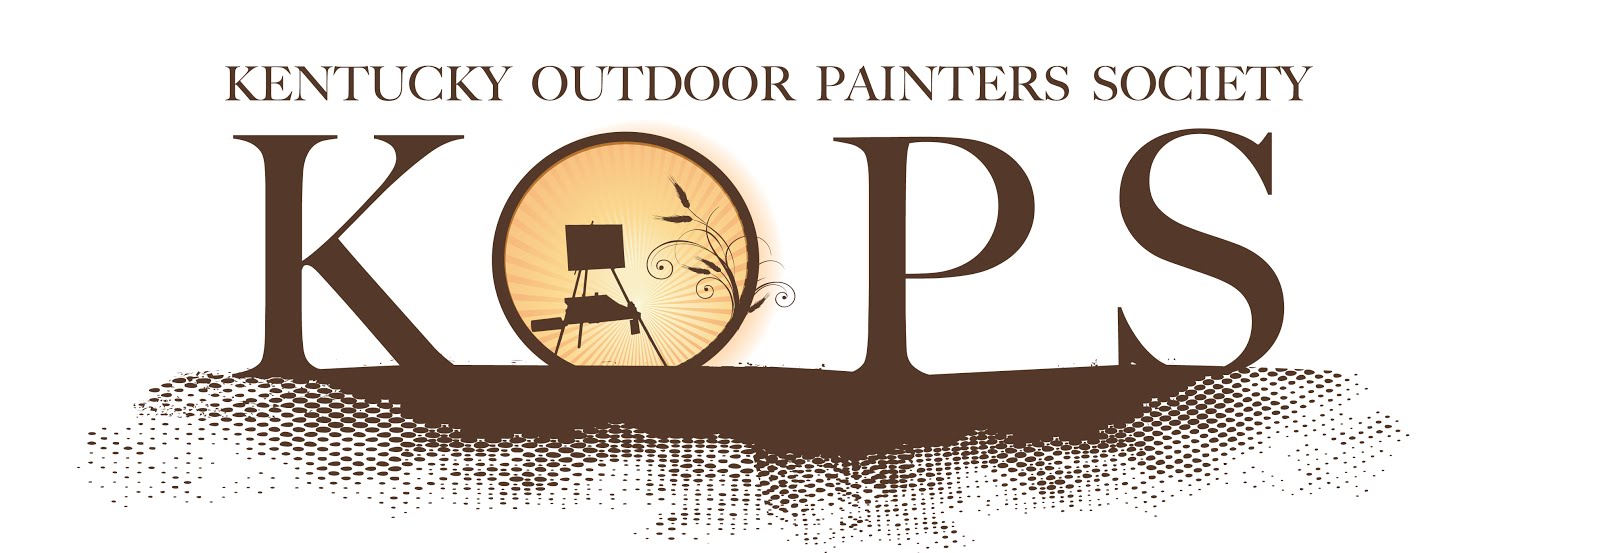 Kentucky Outdoor Painters Society